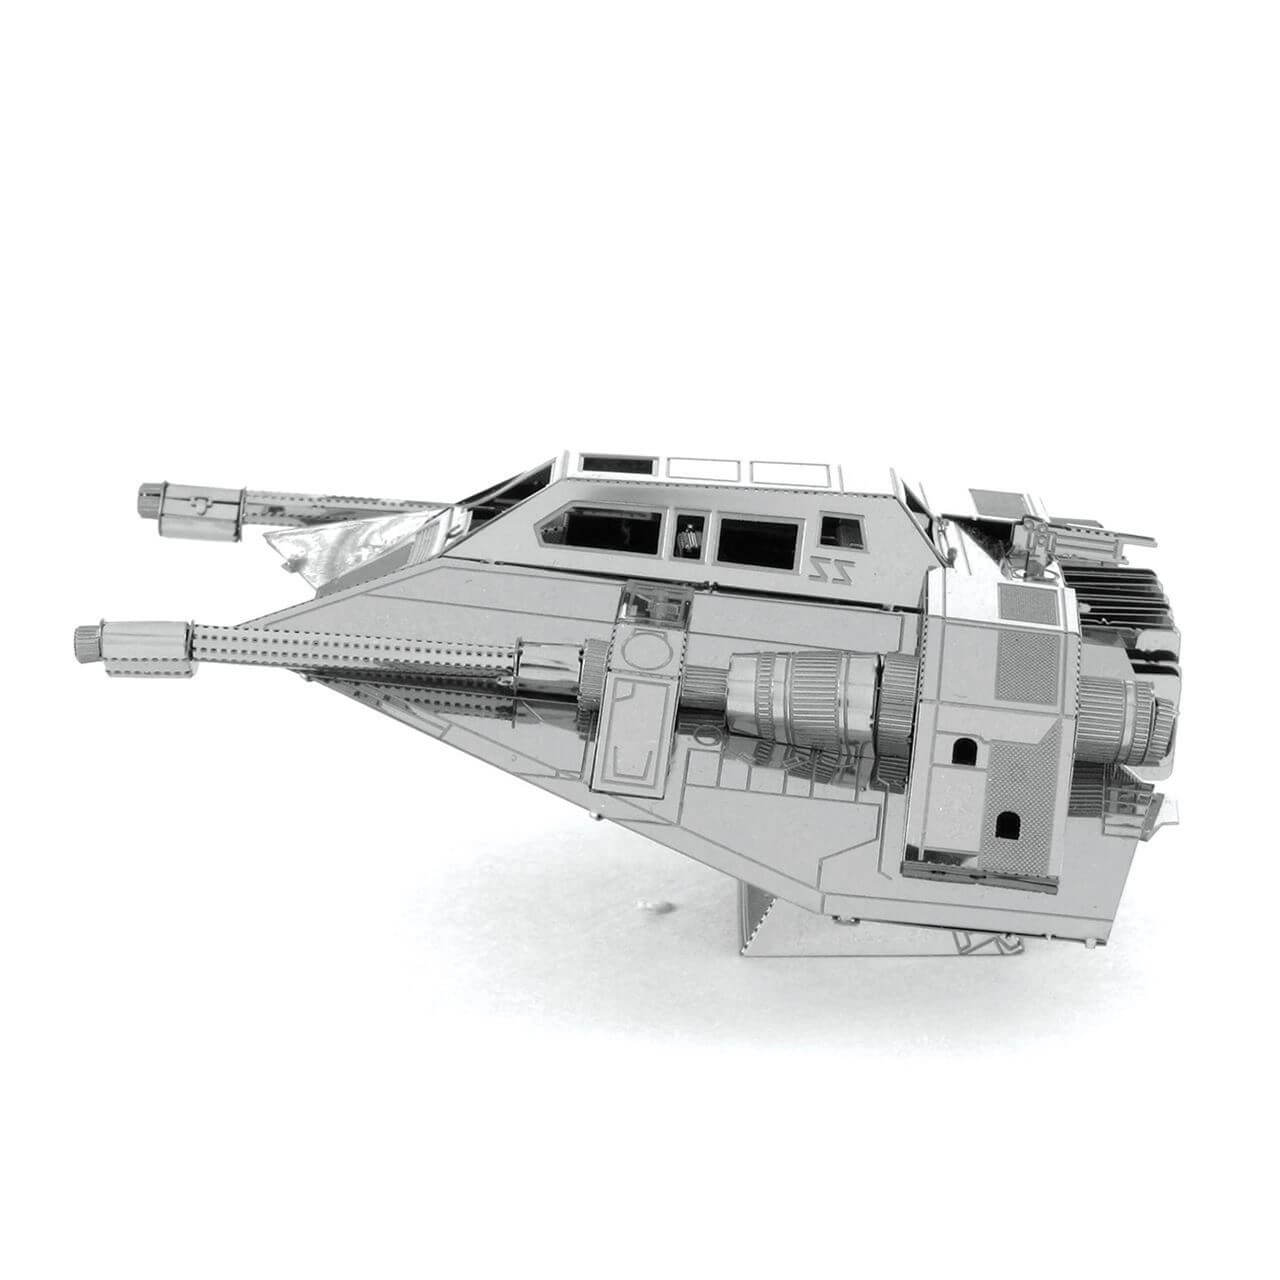 Side view of the Metal Earth Star Wars Snowspeeder Metal Model Kit - 2 Sheets.